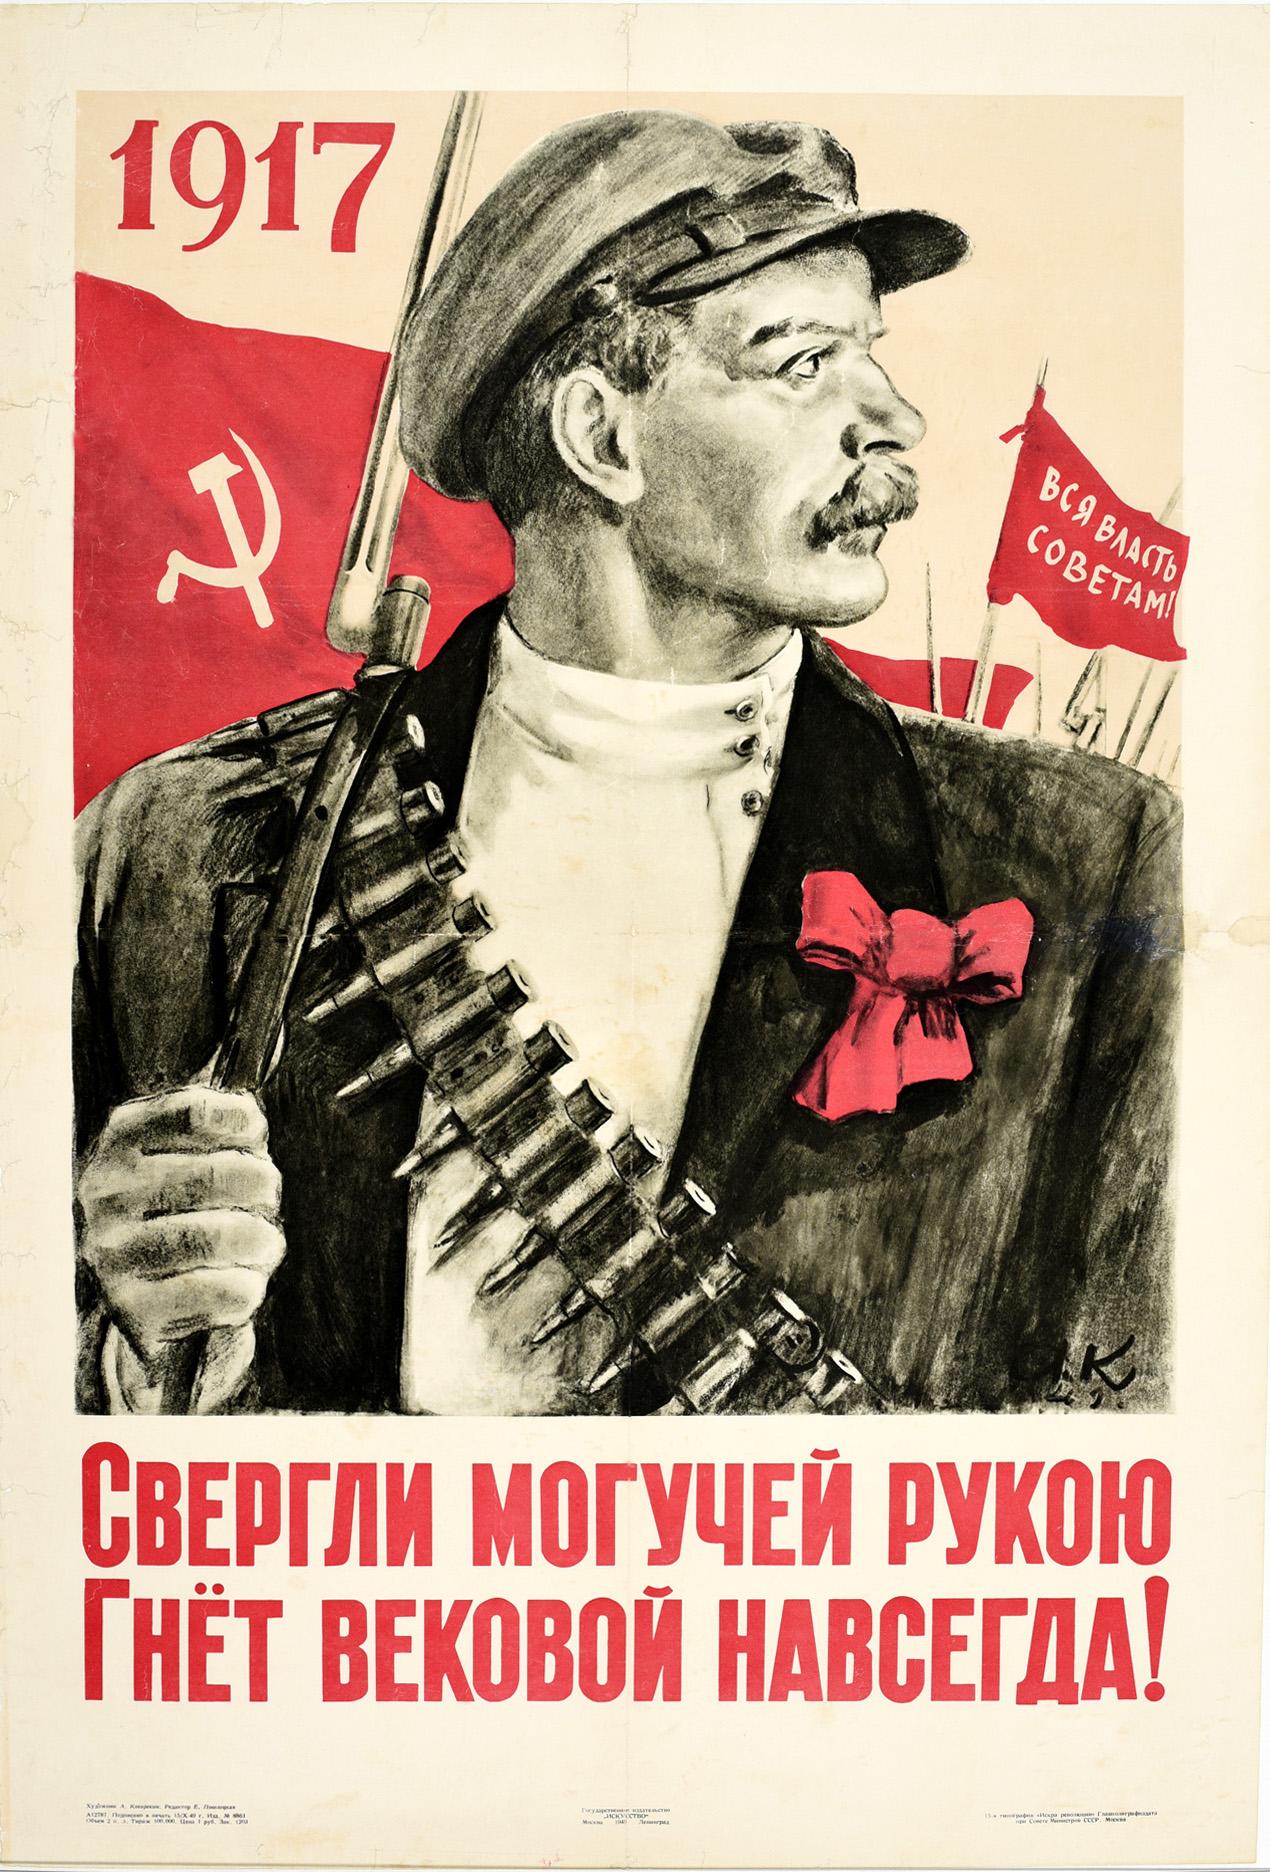 Alexei Kokorekin Print - Original Vintage Communist Revolution Propaganda Poster All Power To The Soviets